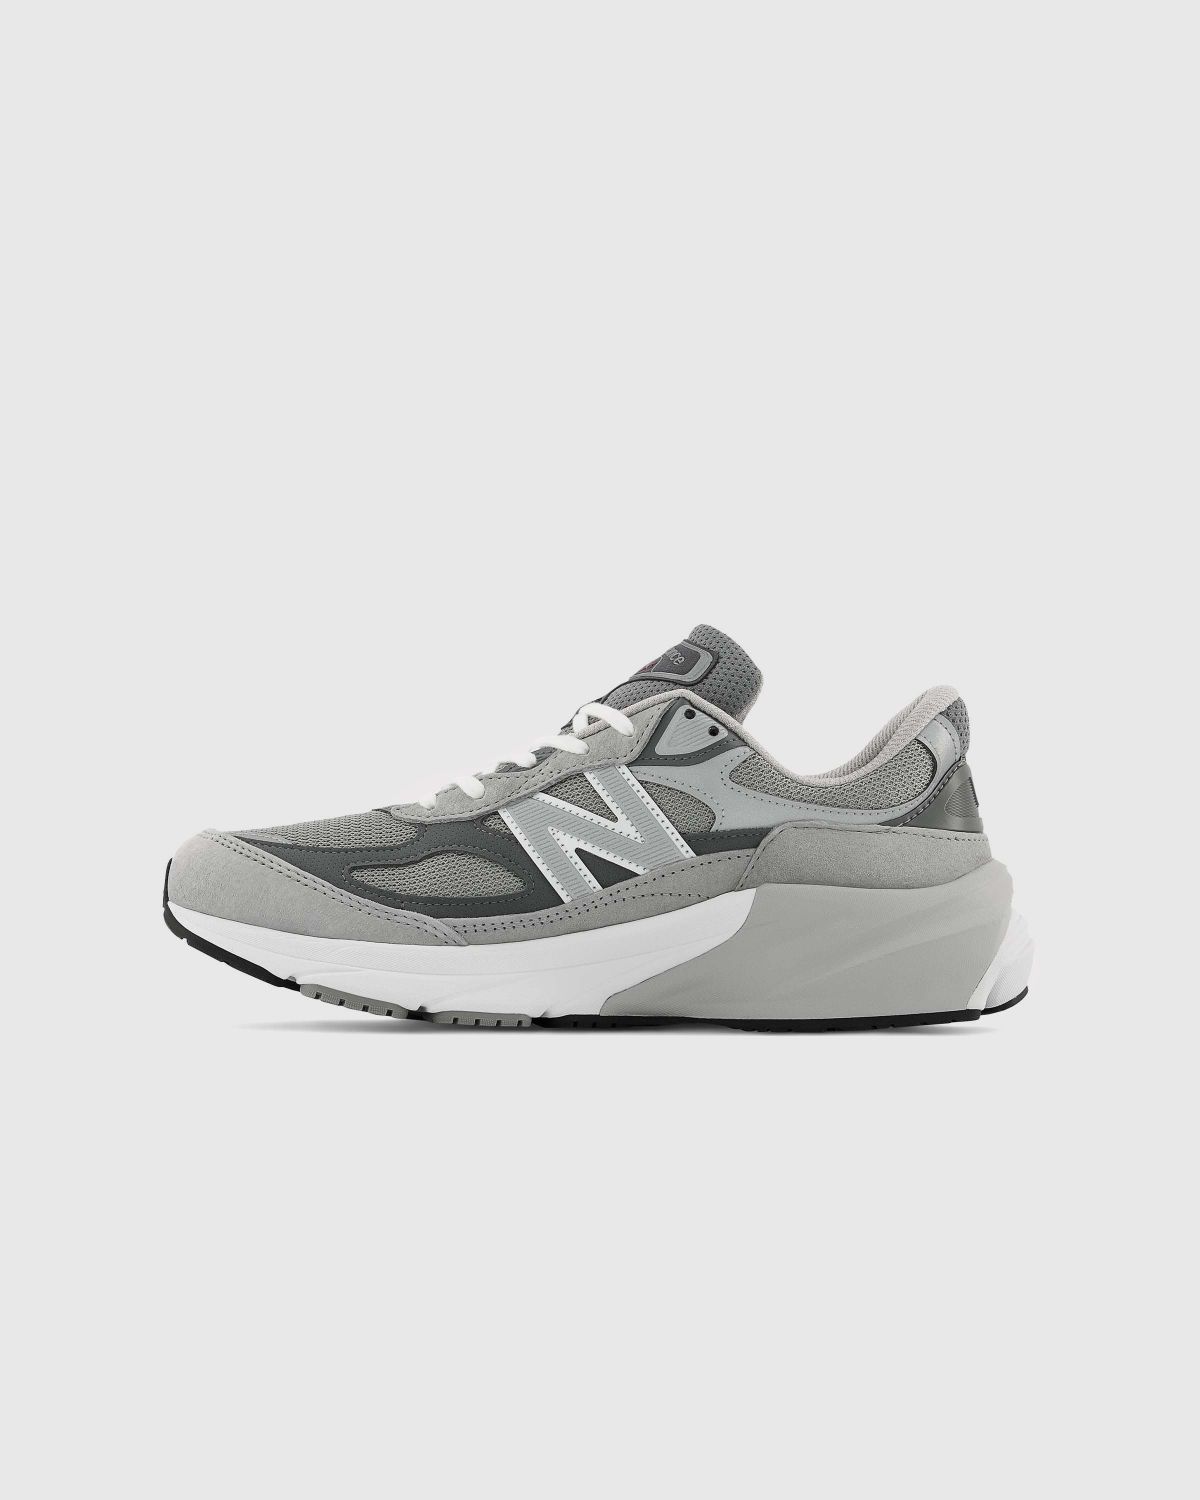 New Balance – M990v6 Cool Gray  - Sneakers - Grey - Image 2